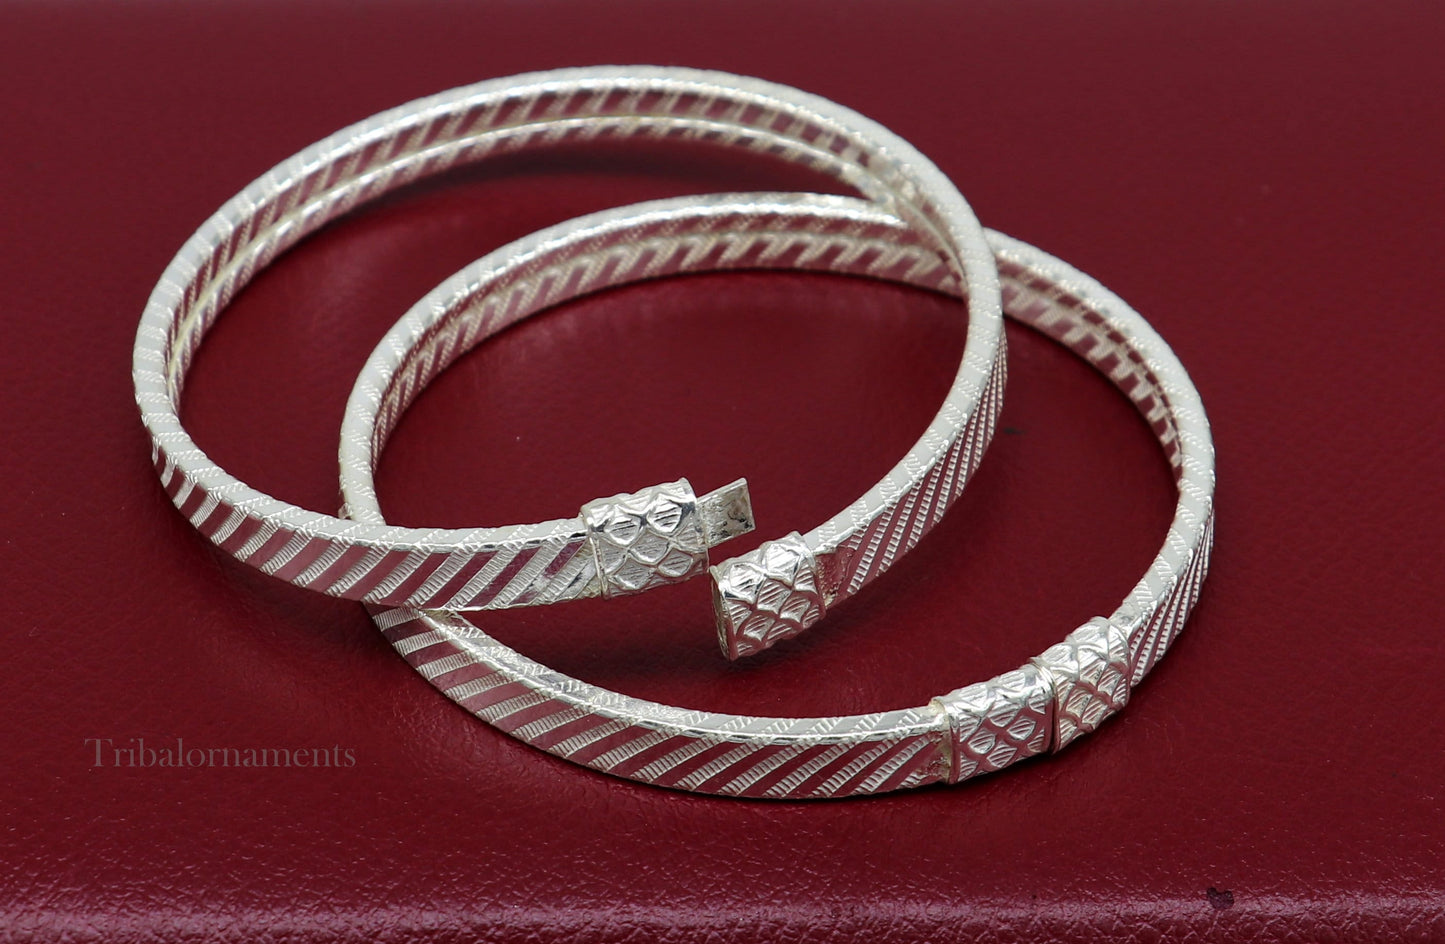 Vintage design Sterling silver amazing bangle bracelet kangan chudi, excellent customized design bangle kada gift tribal jewelry nba214 - TRIBAL ORNAMENTS